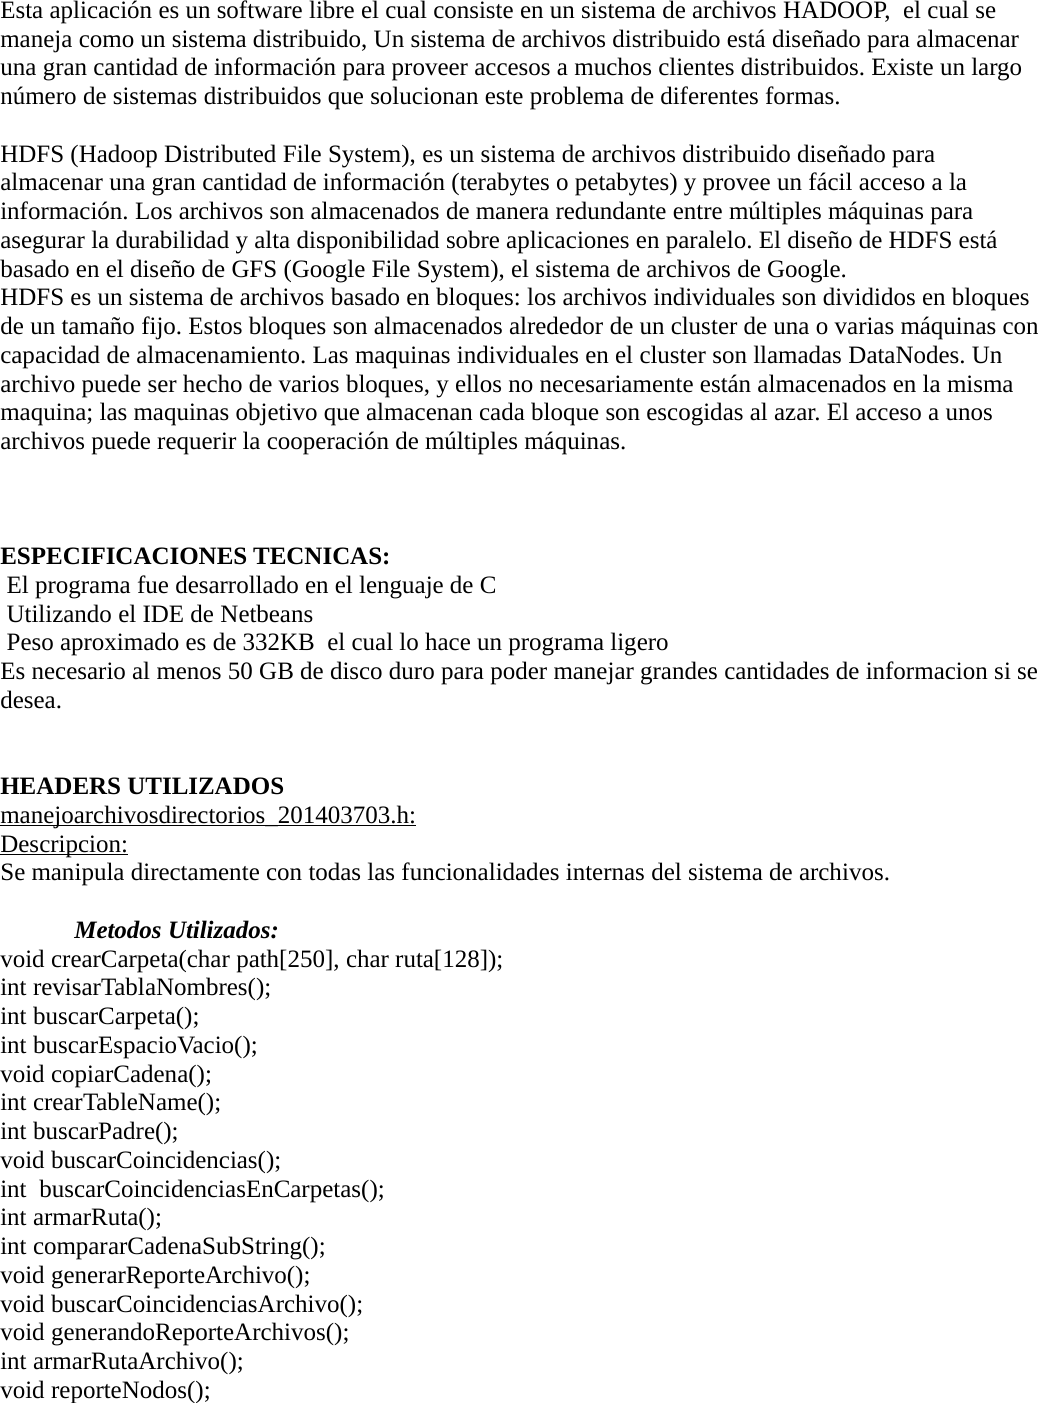 Page 2 of 4 - Manual Tecnico